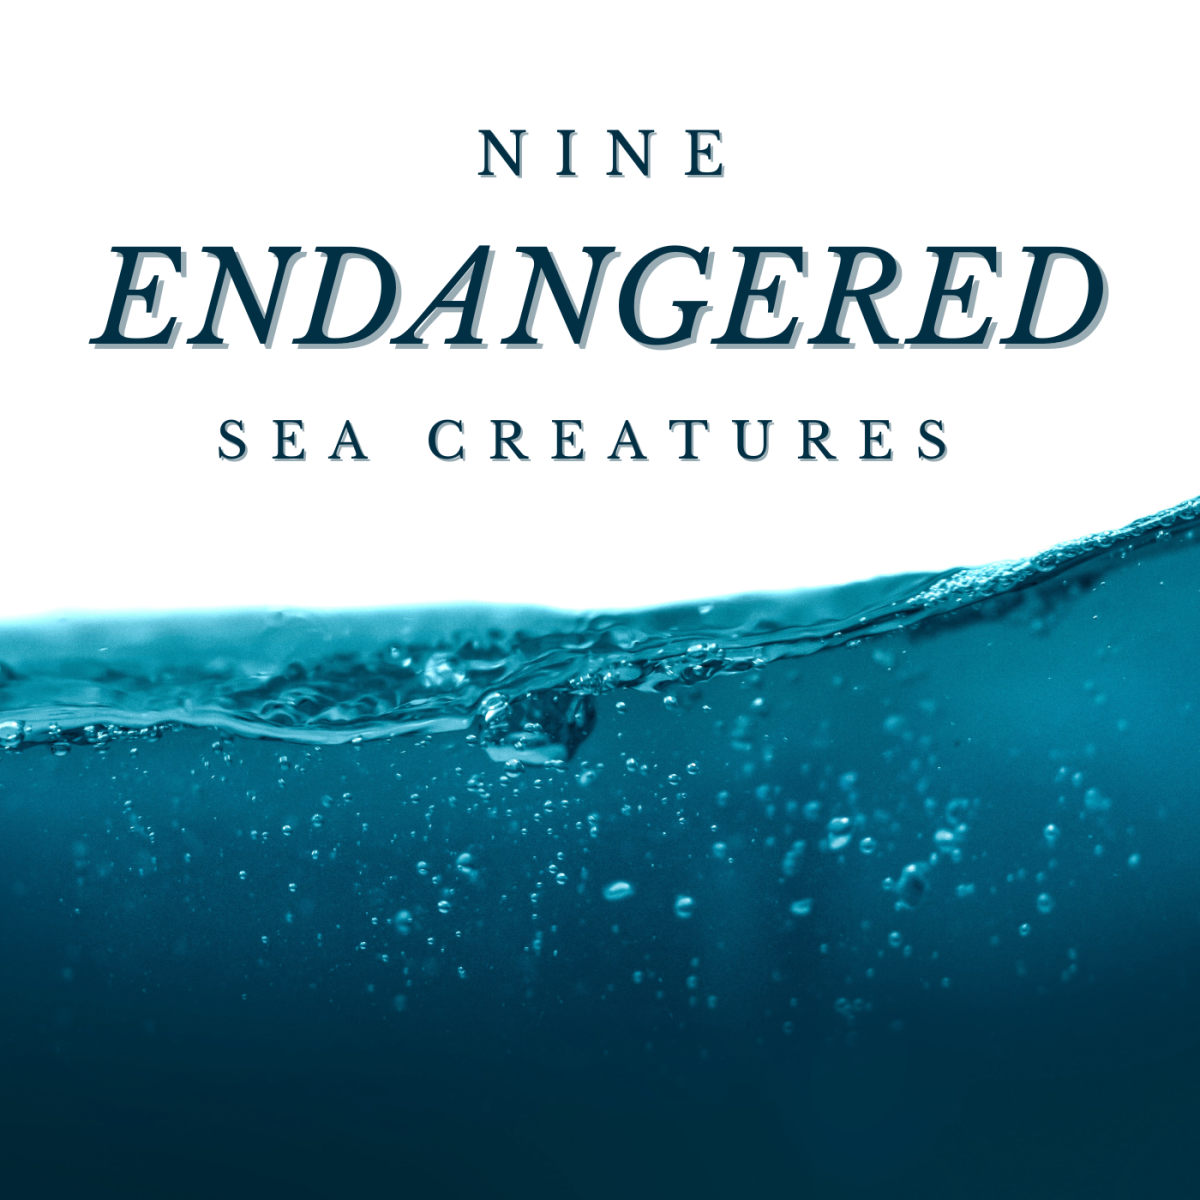 Nine endangered sea creatures